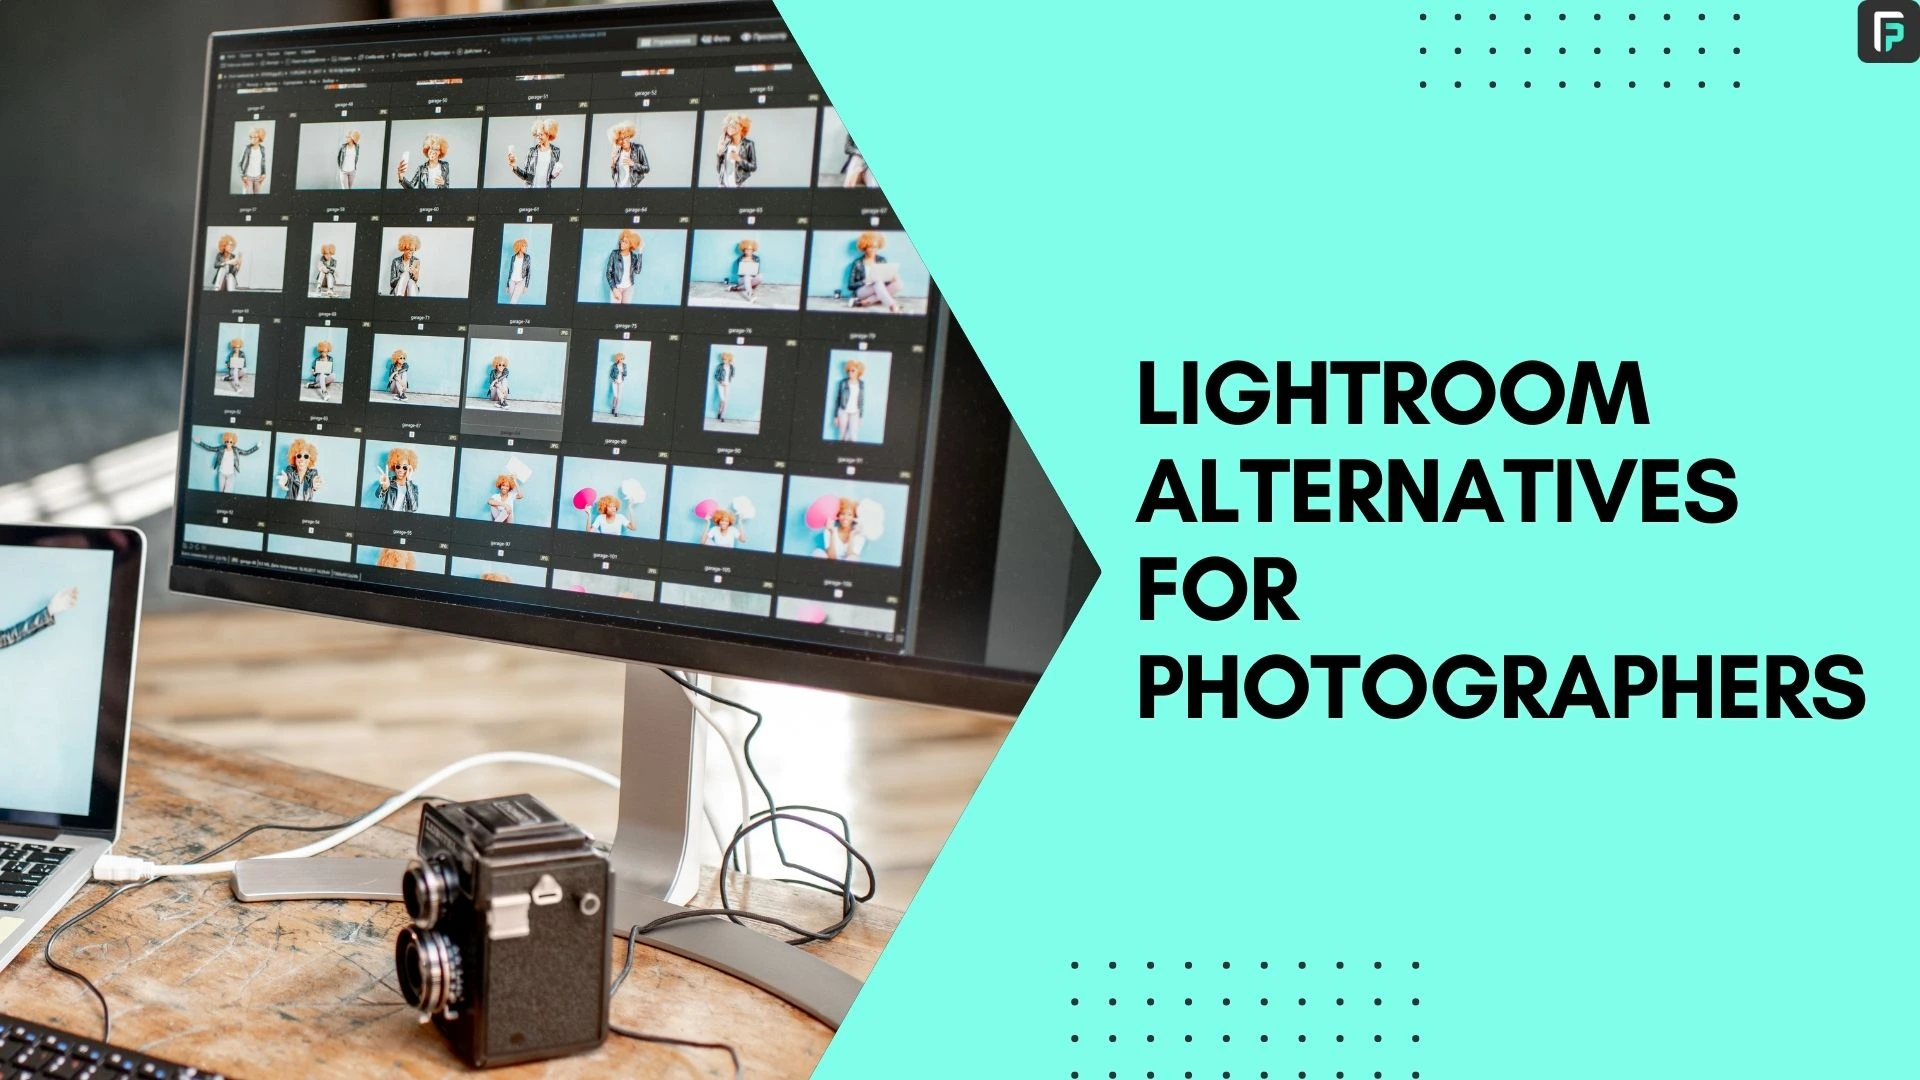 lightroom alternatives for photographers